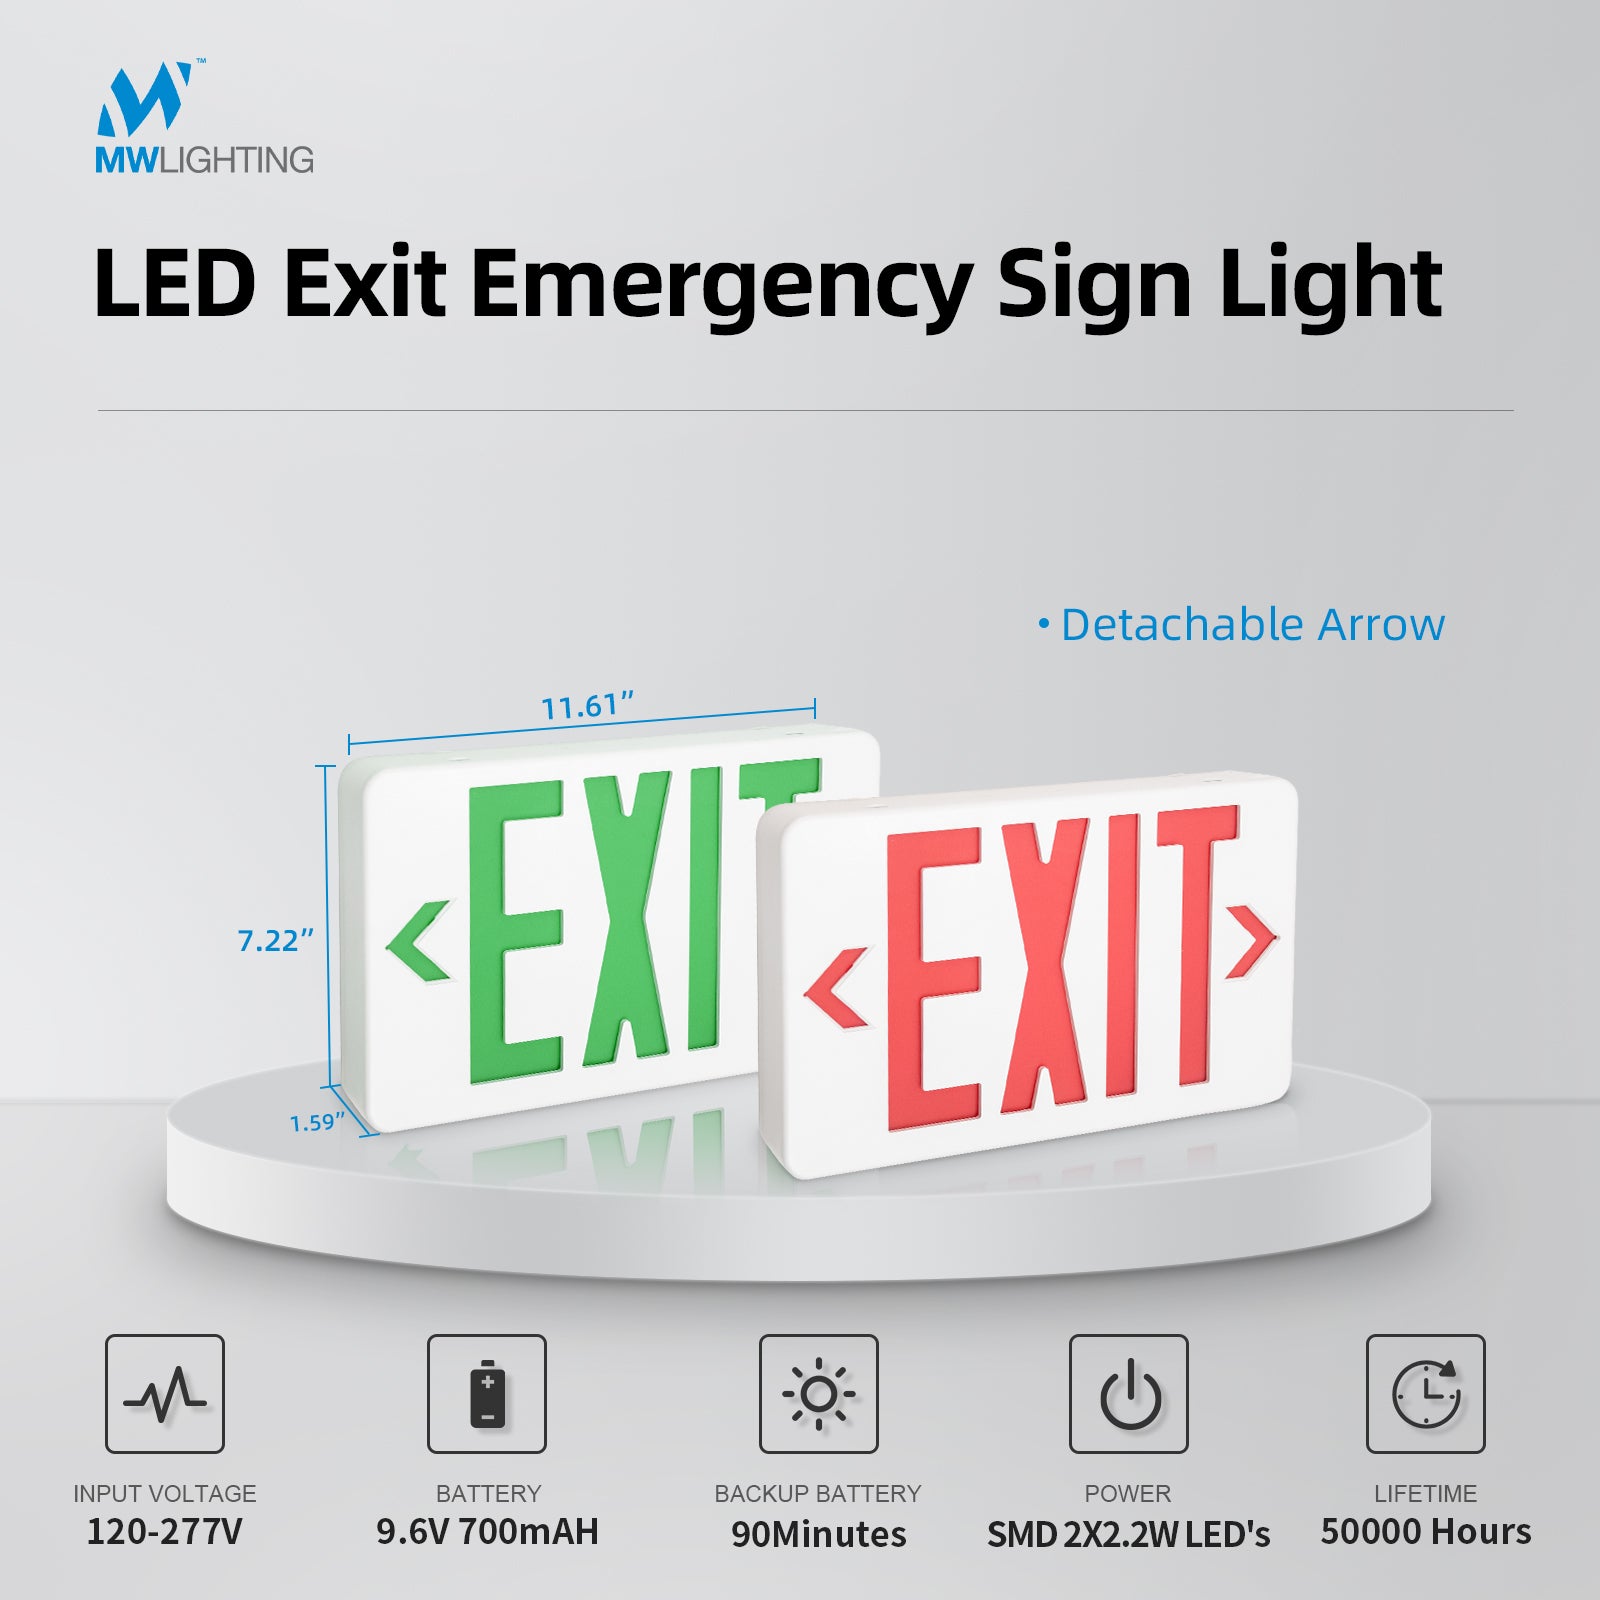 3W emergency exit light signage for safe evacuation